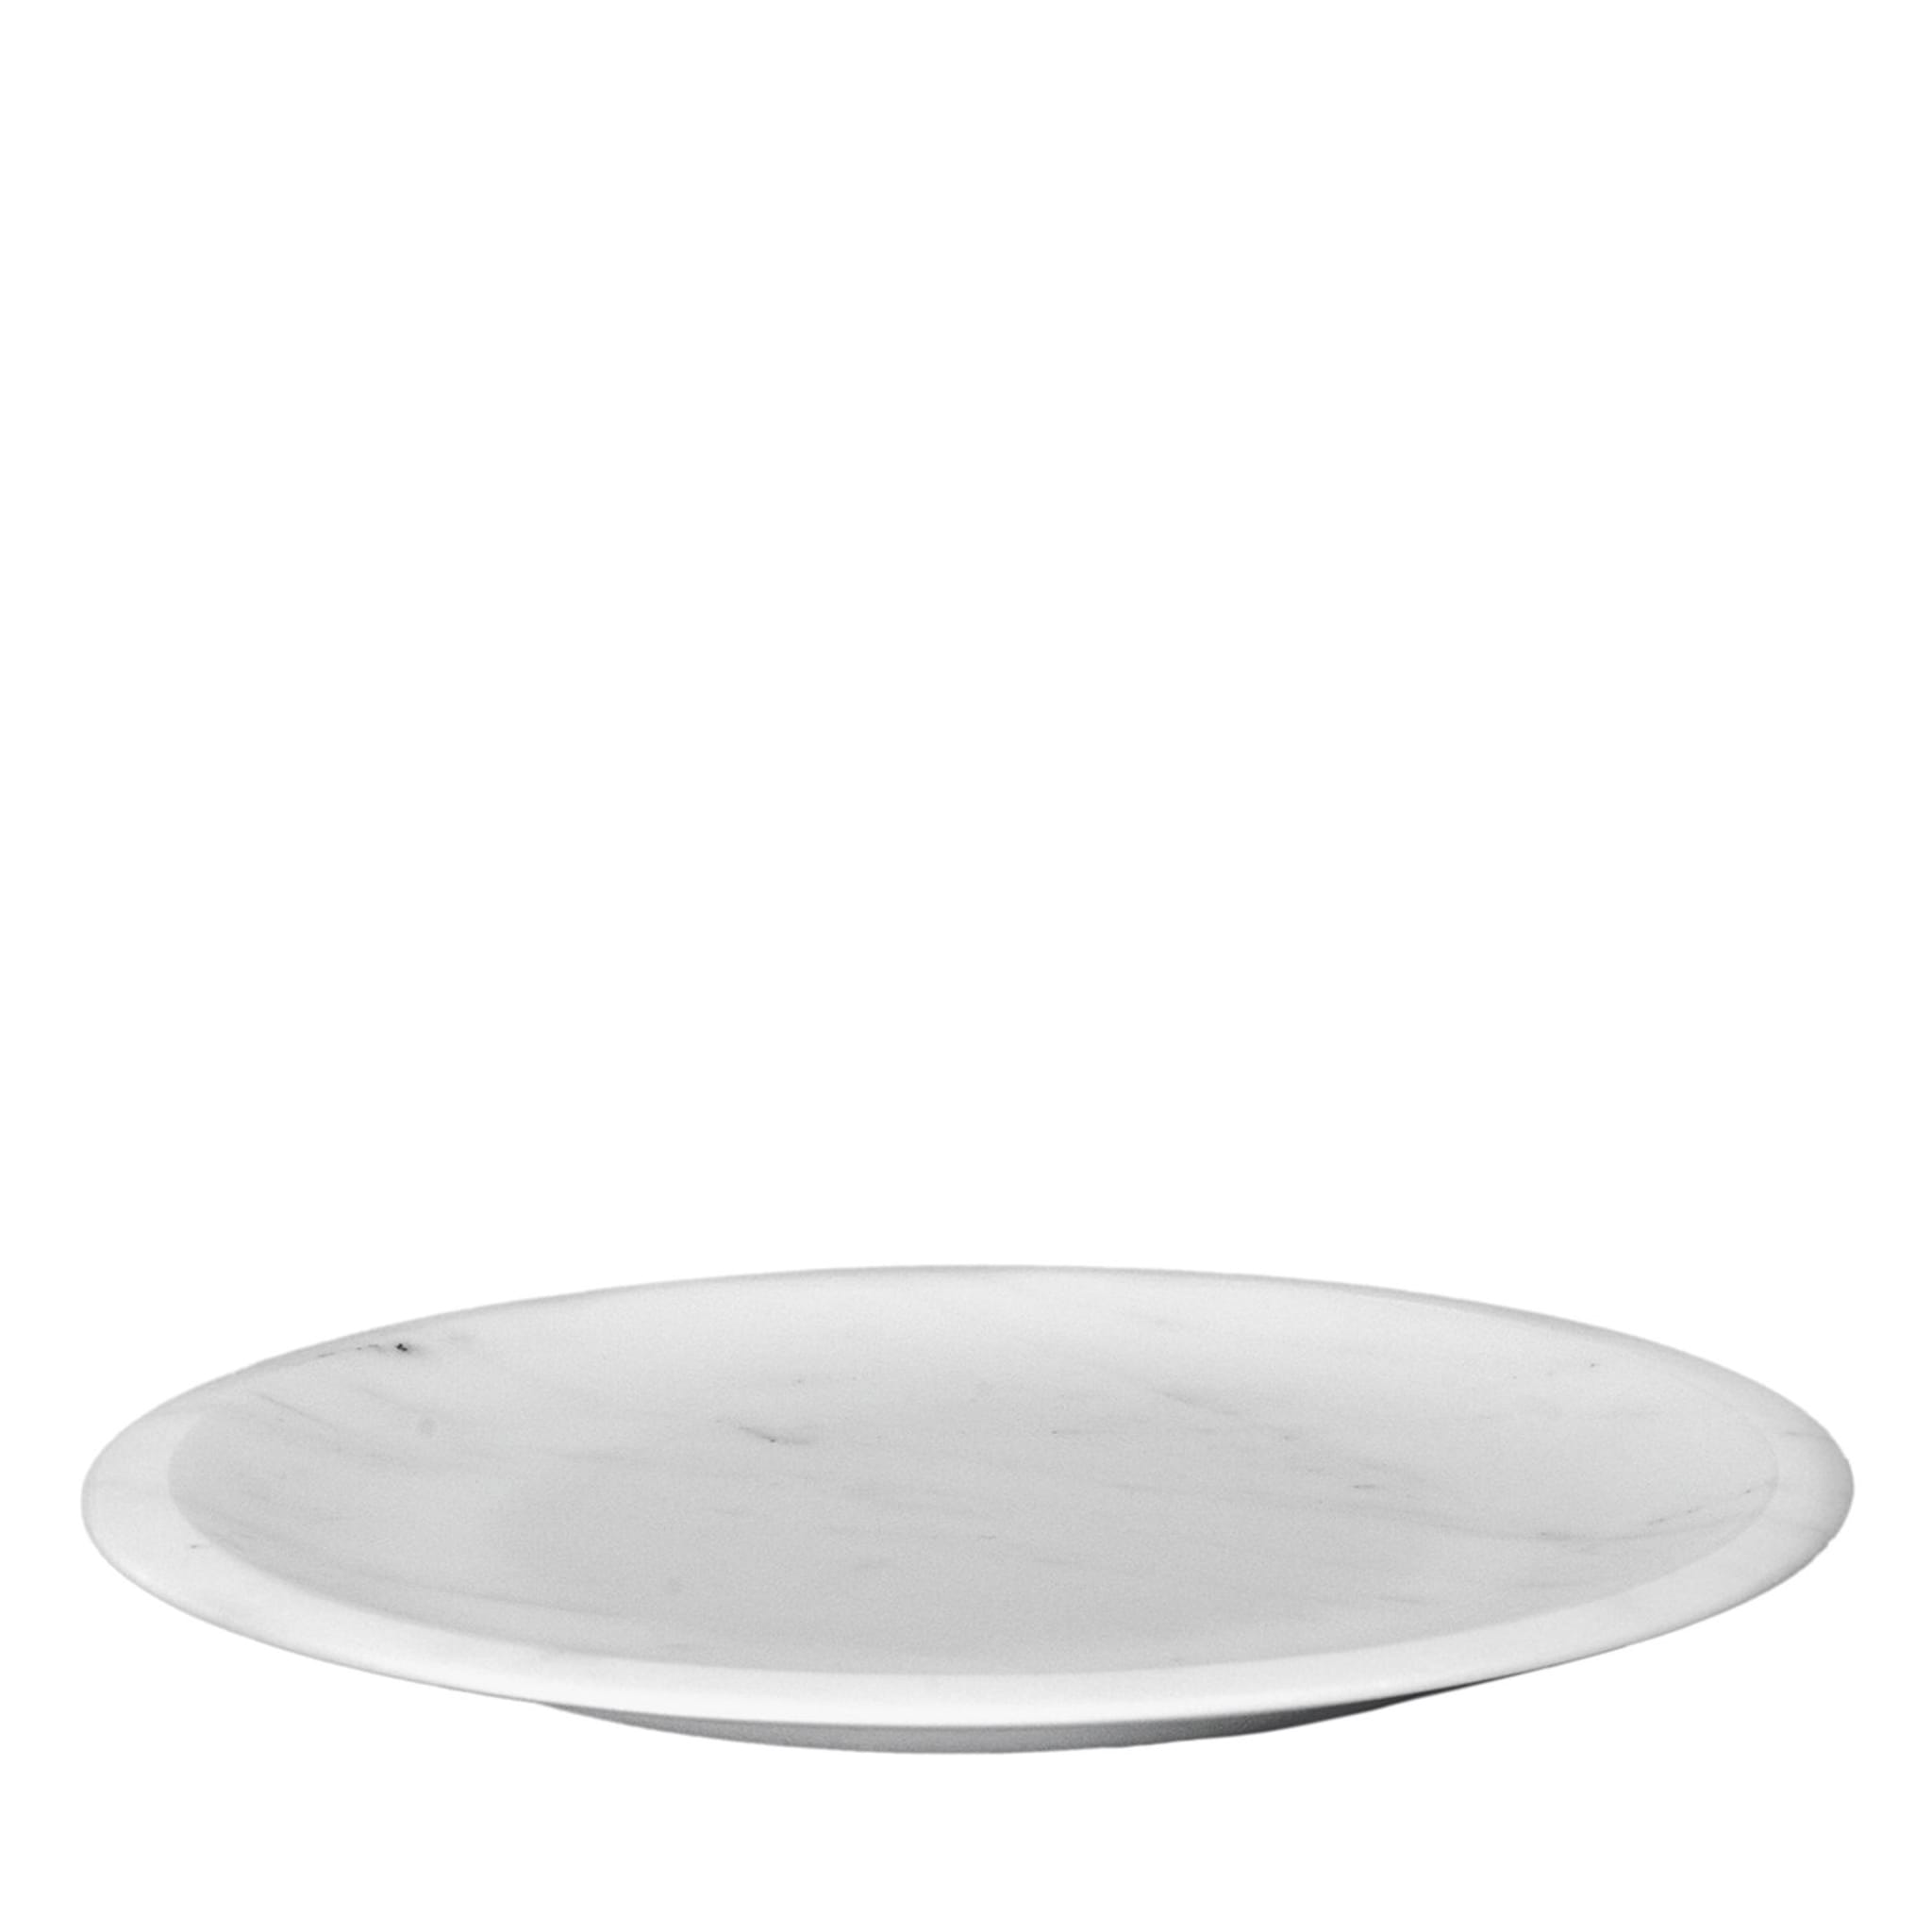 White Carrara Dinner Plate by Ivan Colominas #1 - Main view